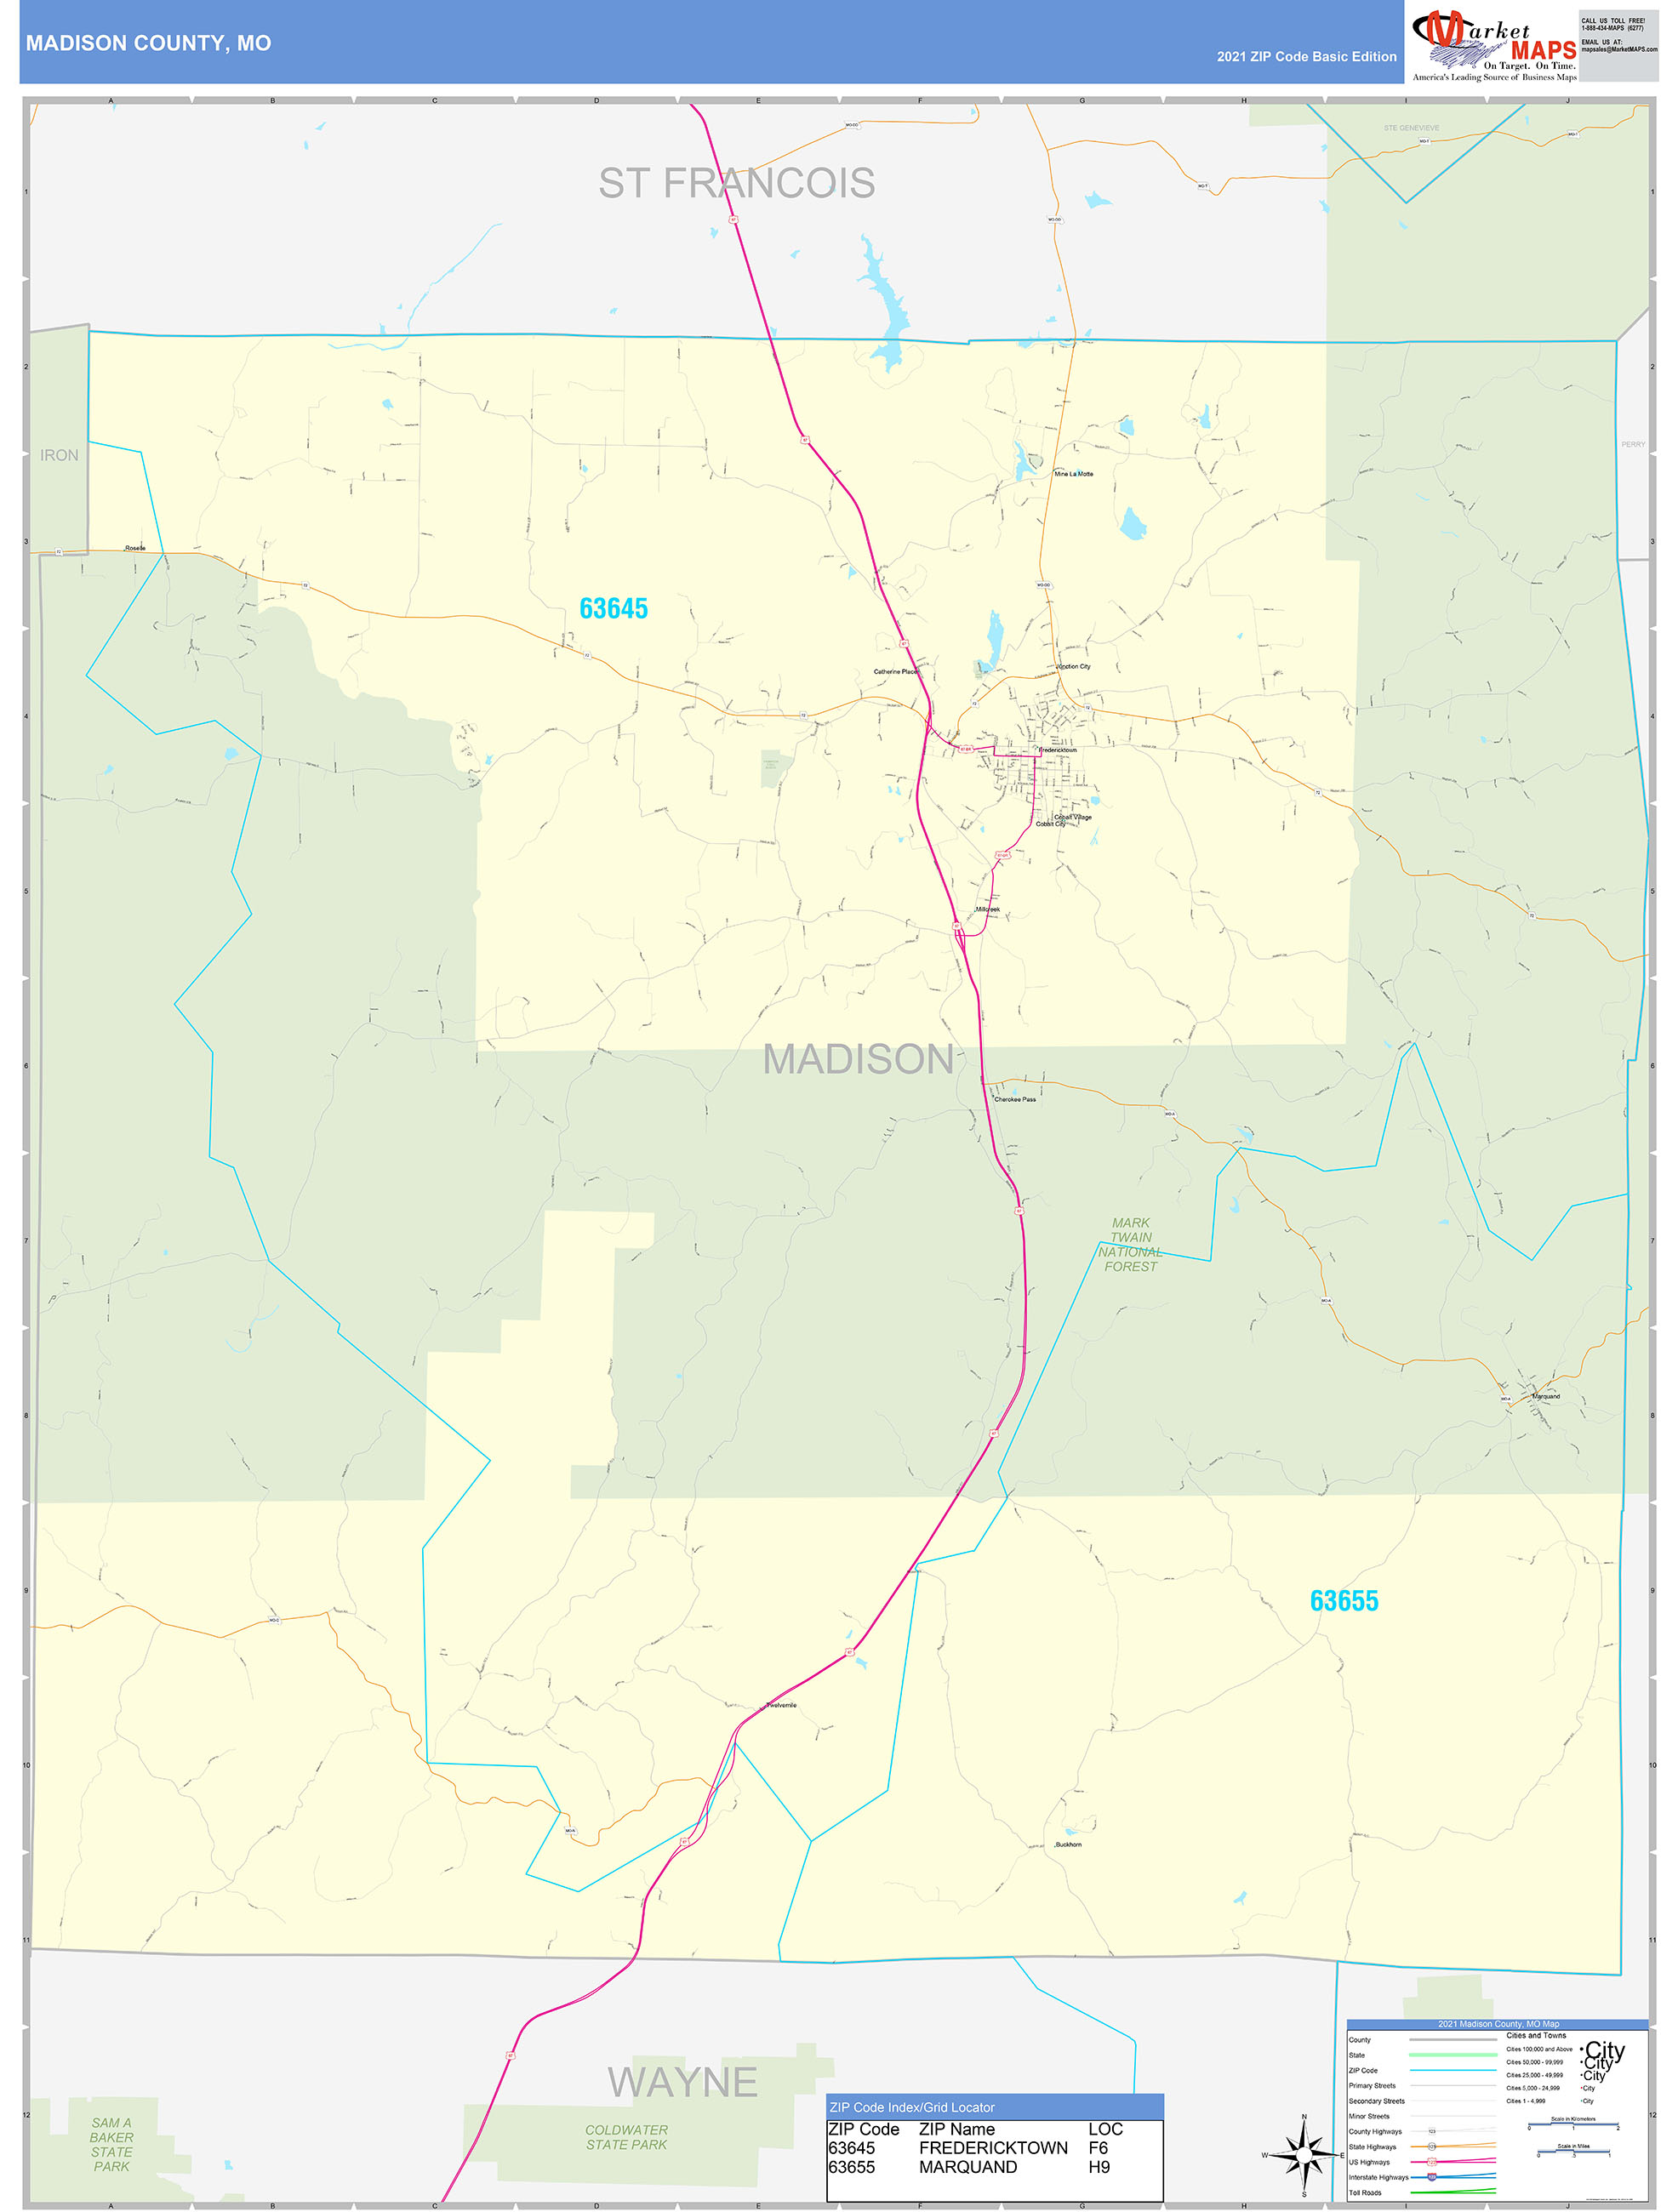 Madison County, MO Zip Code Wall Map Basic Style by MarketMAPS